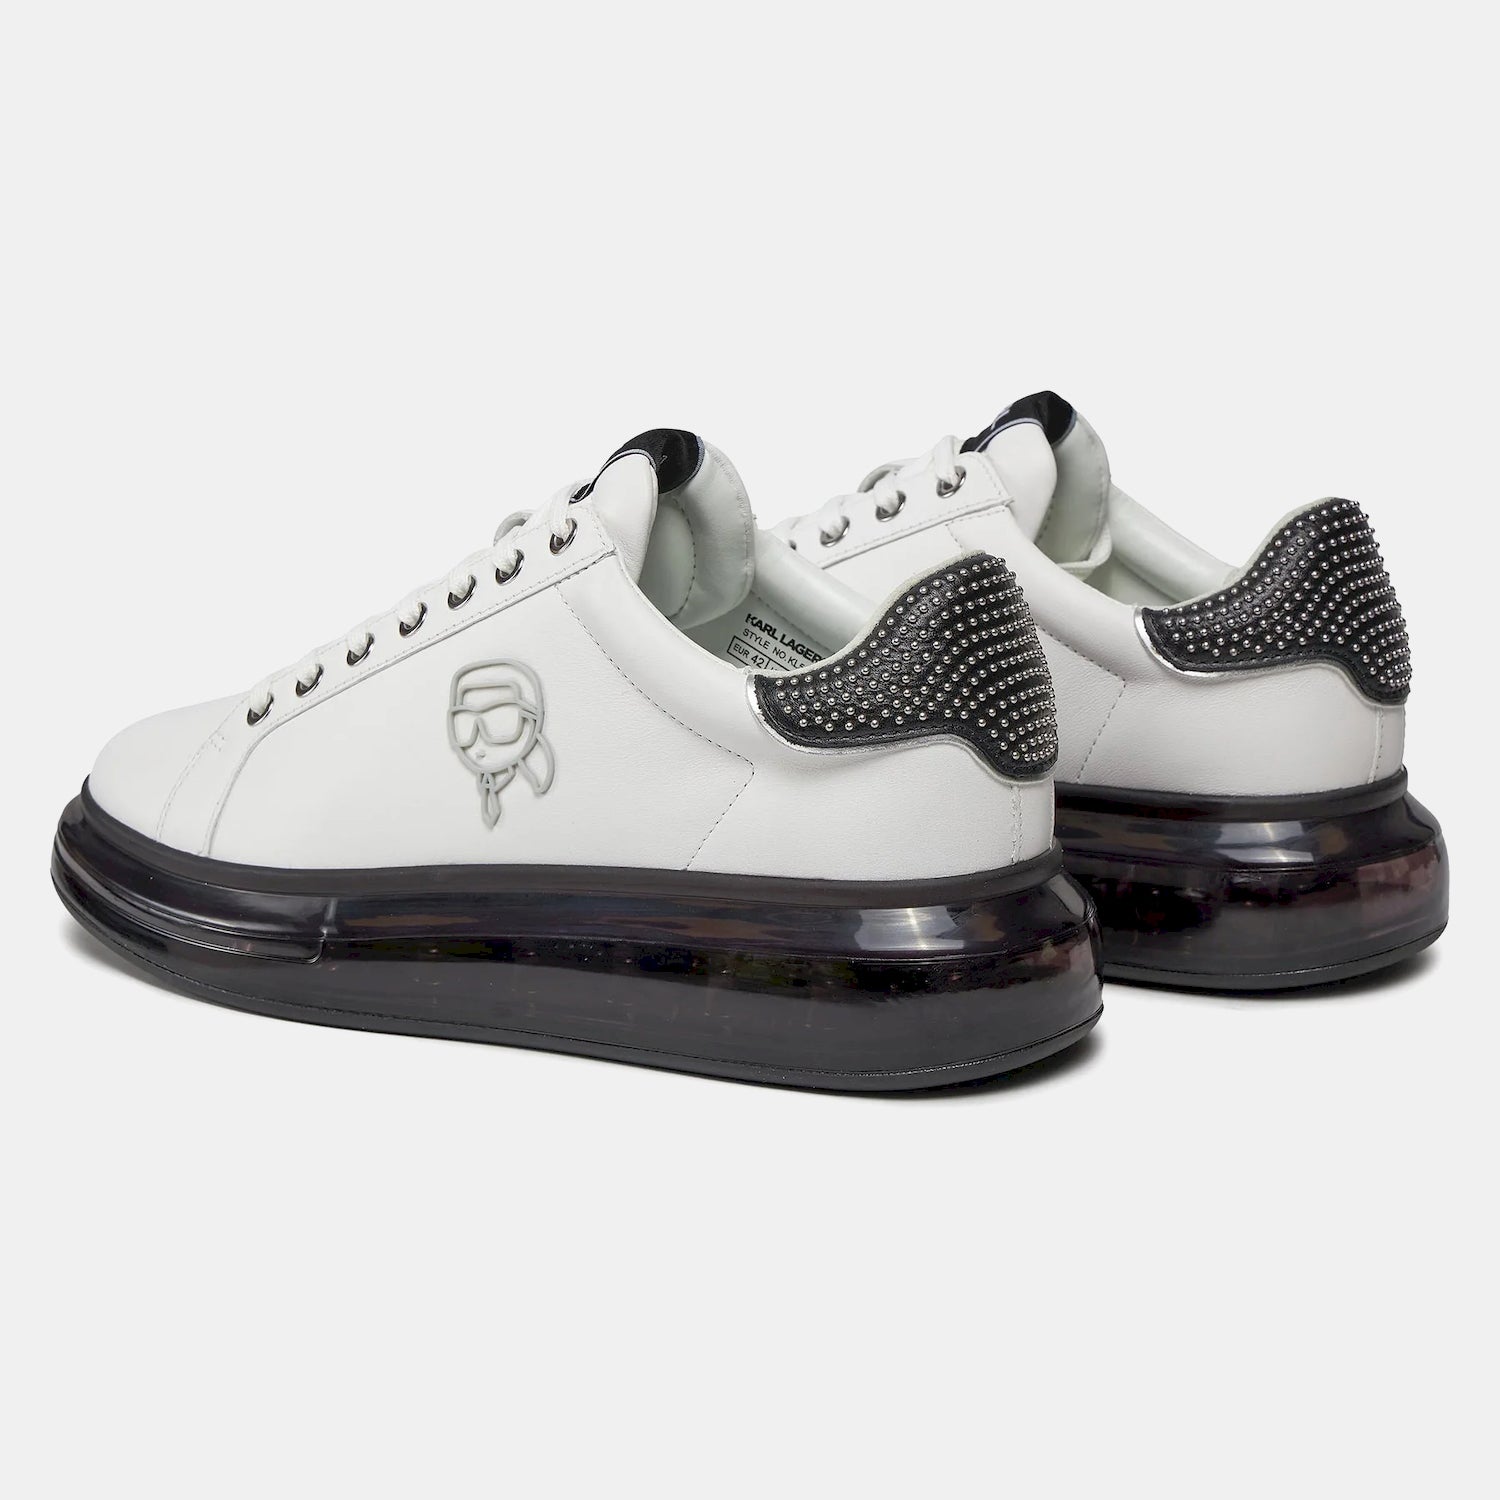 Karl Lagerfeld Sapatilhas Sneakers Shoes Kl52631n Whi Black Branco Preto_shot2